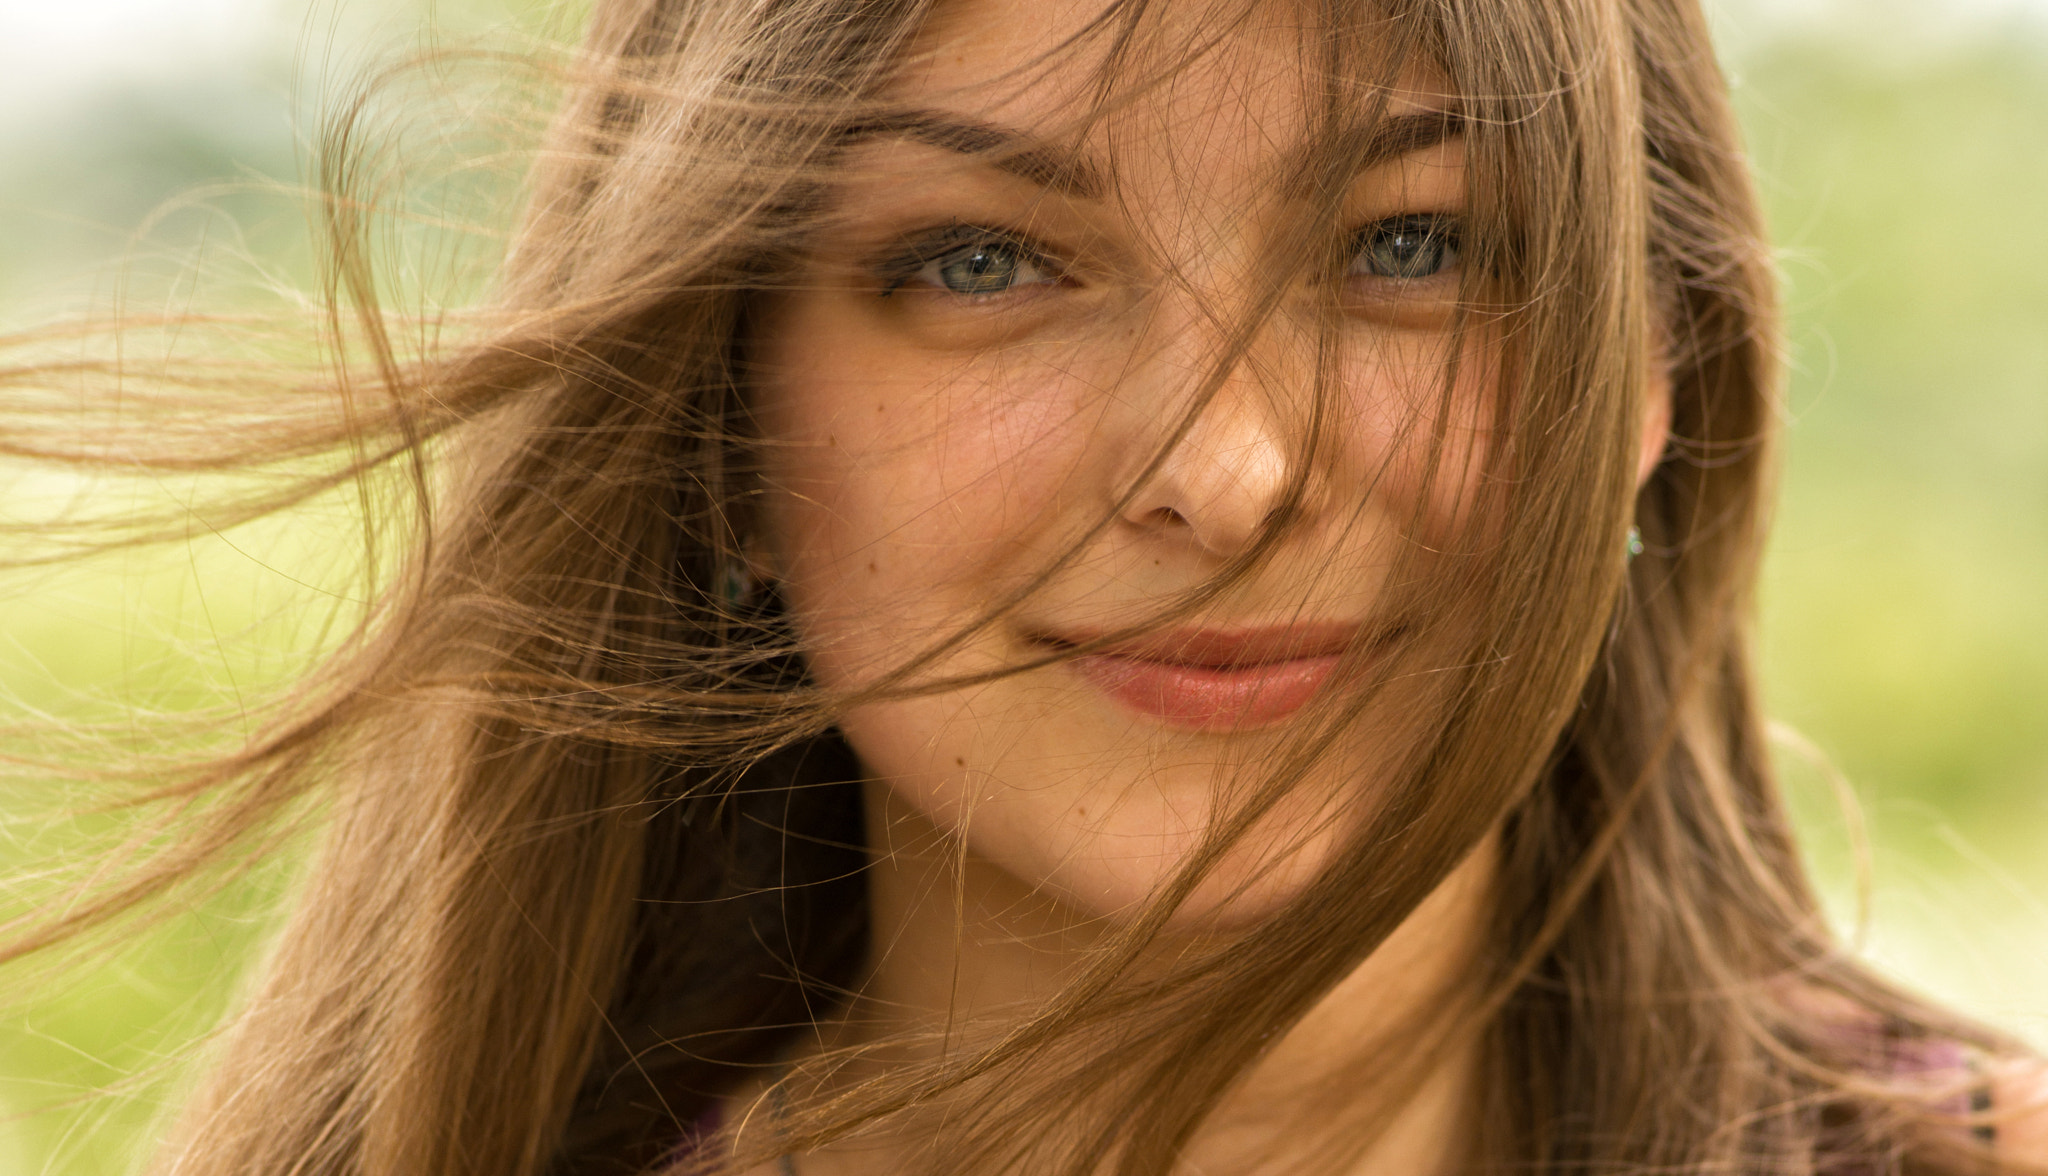 Daria Kuncikova Brunette Anton Pechkurov Women Face Looking At Viewer Hair In Face Closeup Portrait  2048x1176